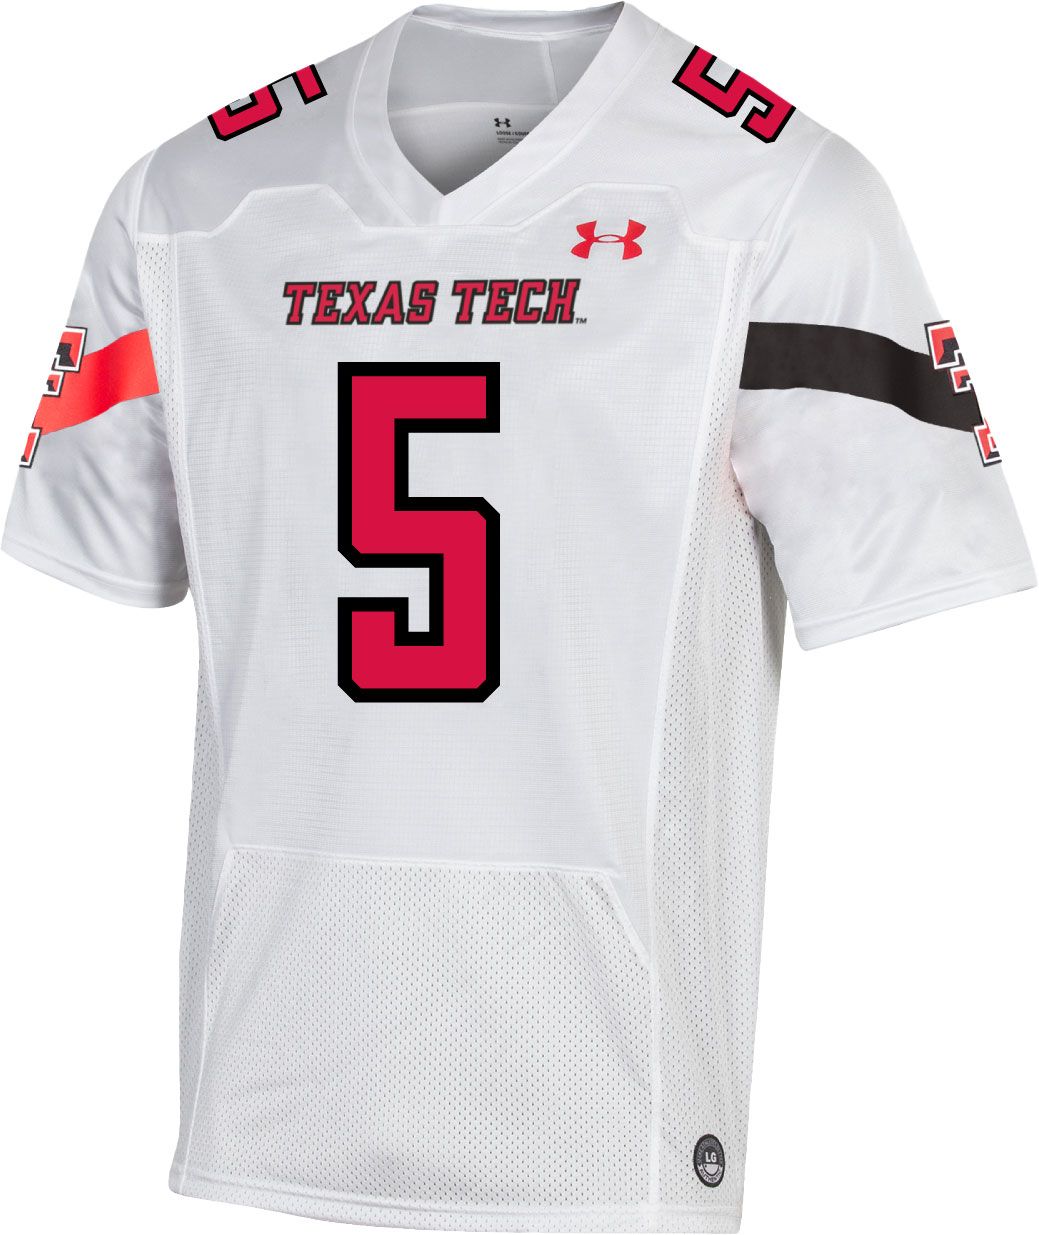 Texas Tech Red Raiders football jersey